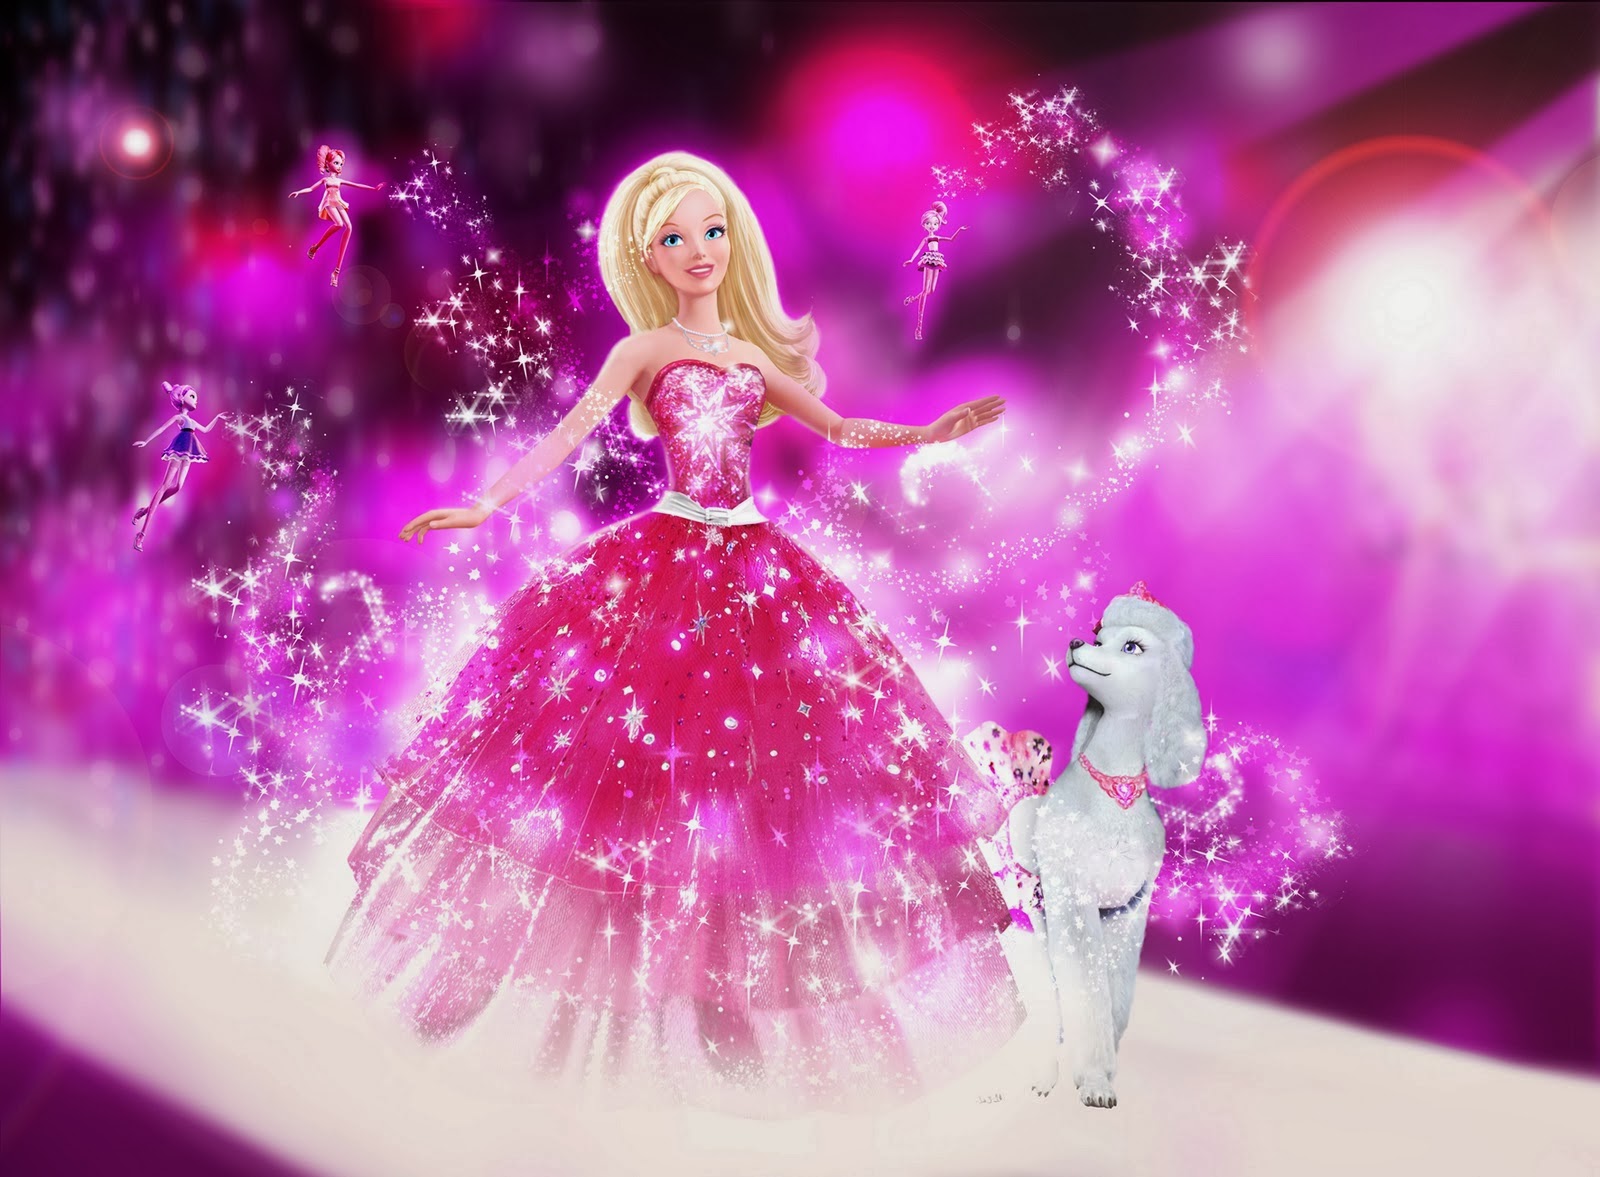 Free download Beautiful HD Wallpapers 4 u Free Download Barbie ...